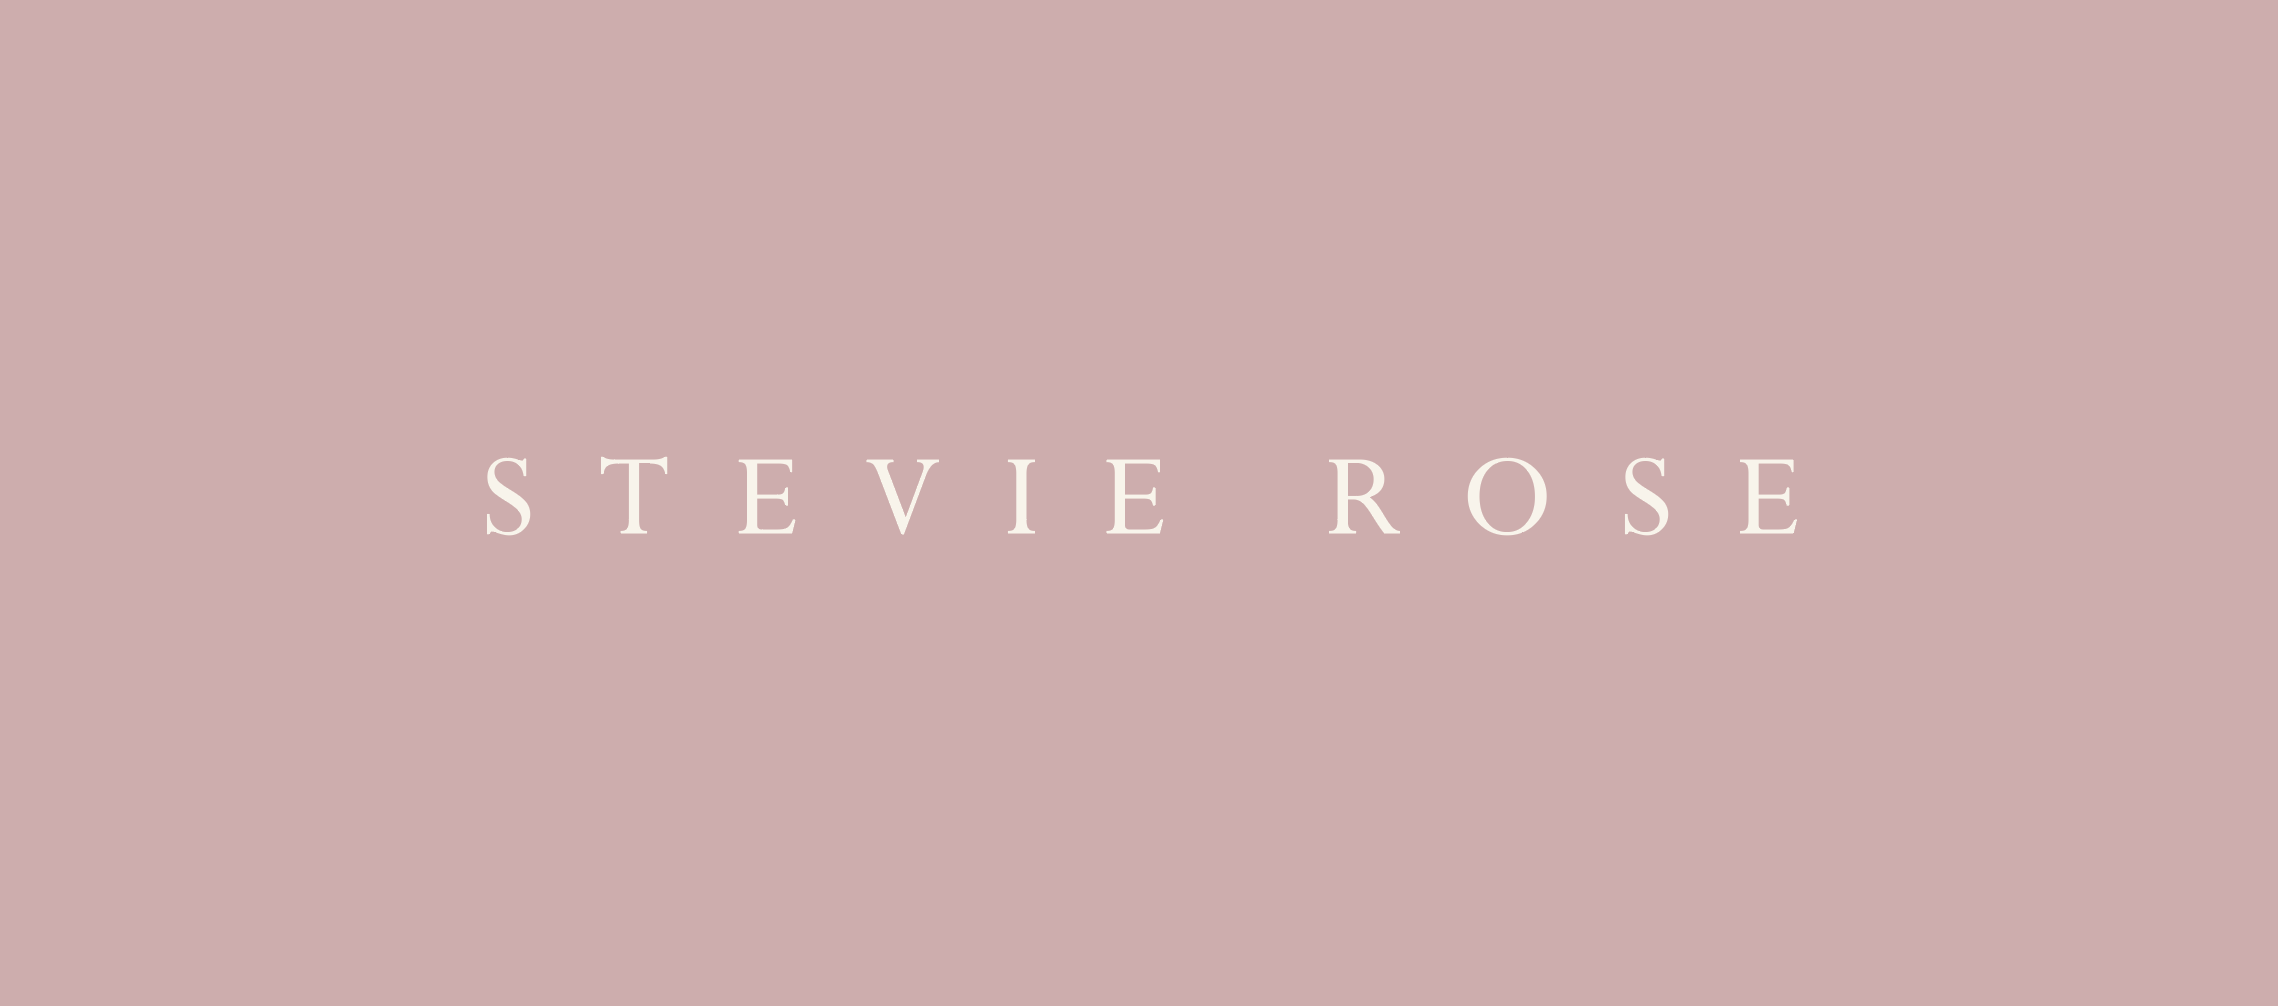 Stevie Rose — Studio Lily Kate